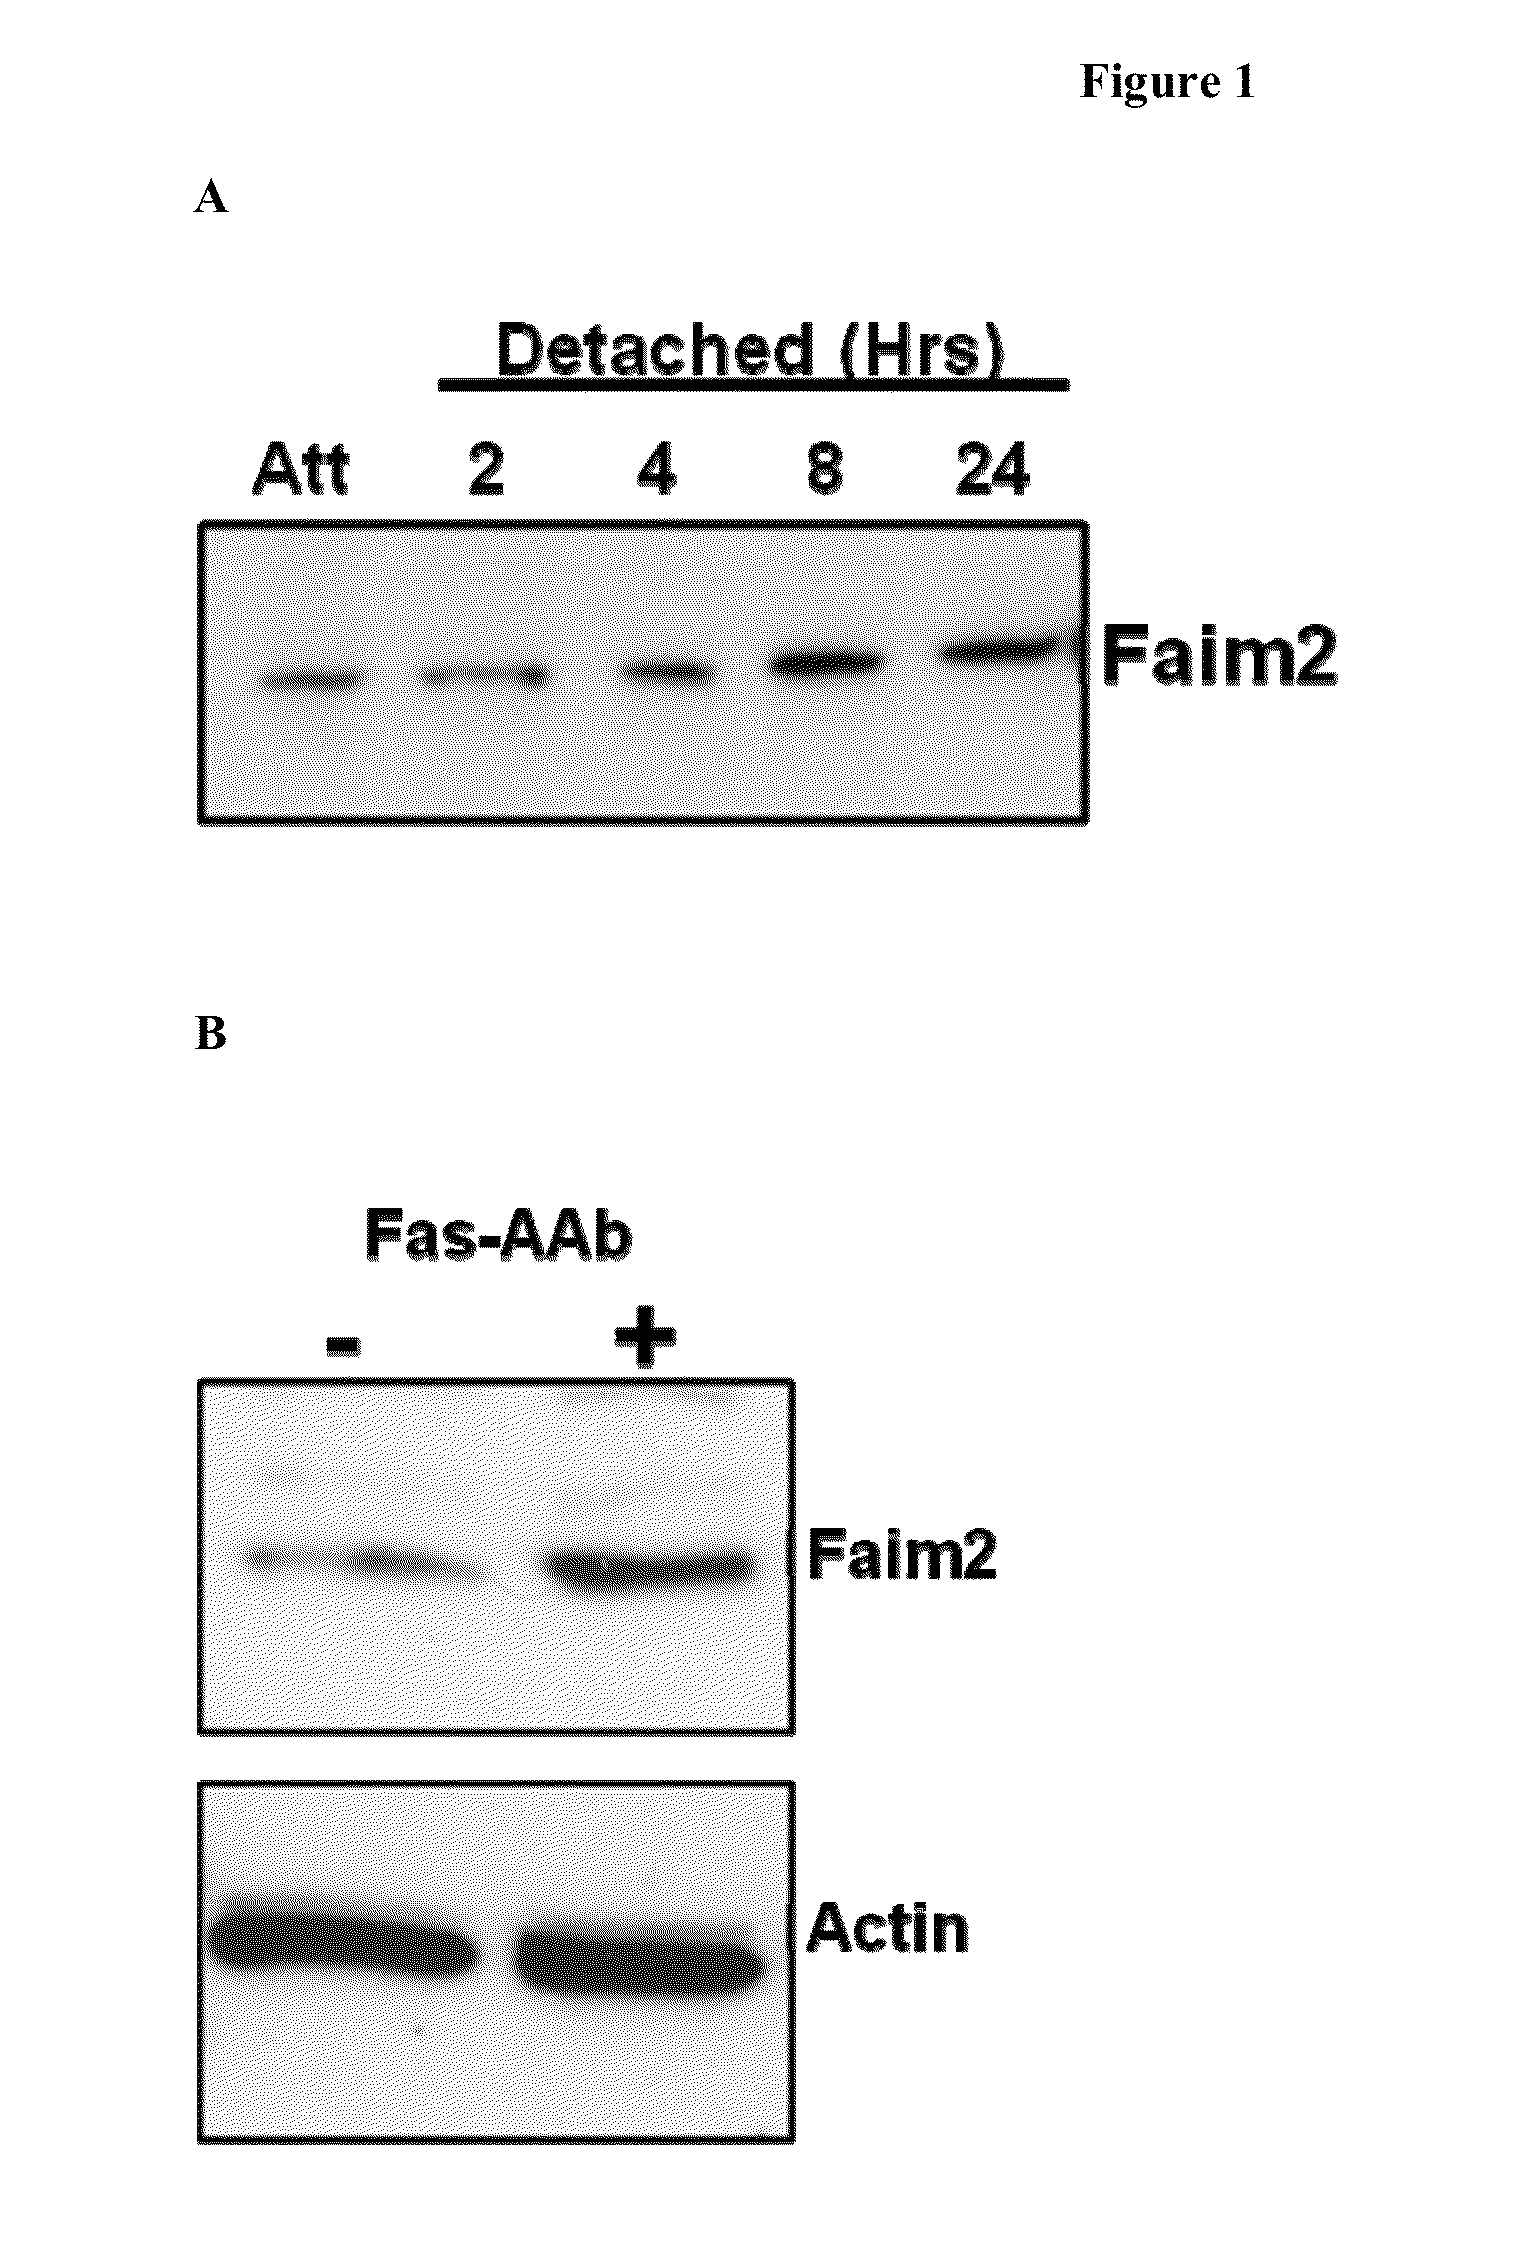 Methods of inhibiting photoreceptor apoptosis by eliciting the Faim2 antiapoptotic pathway